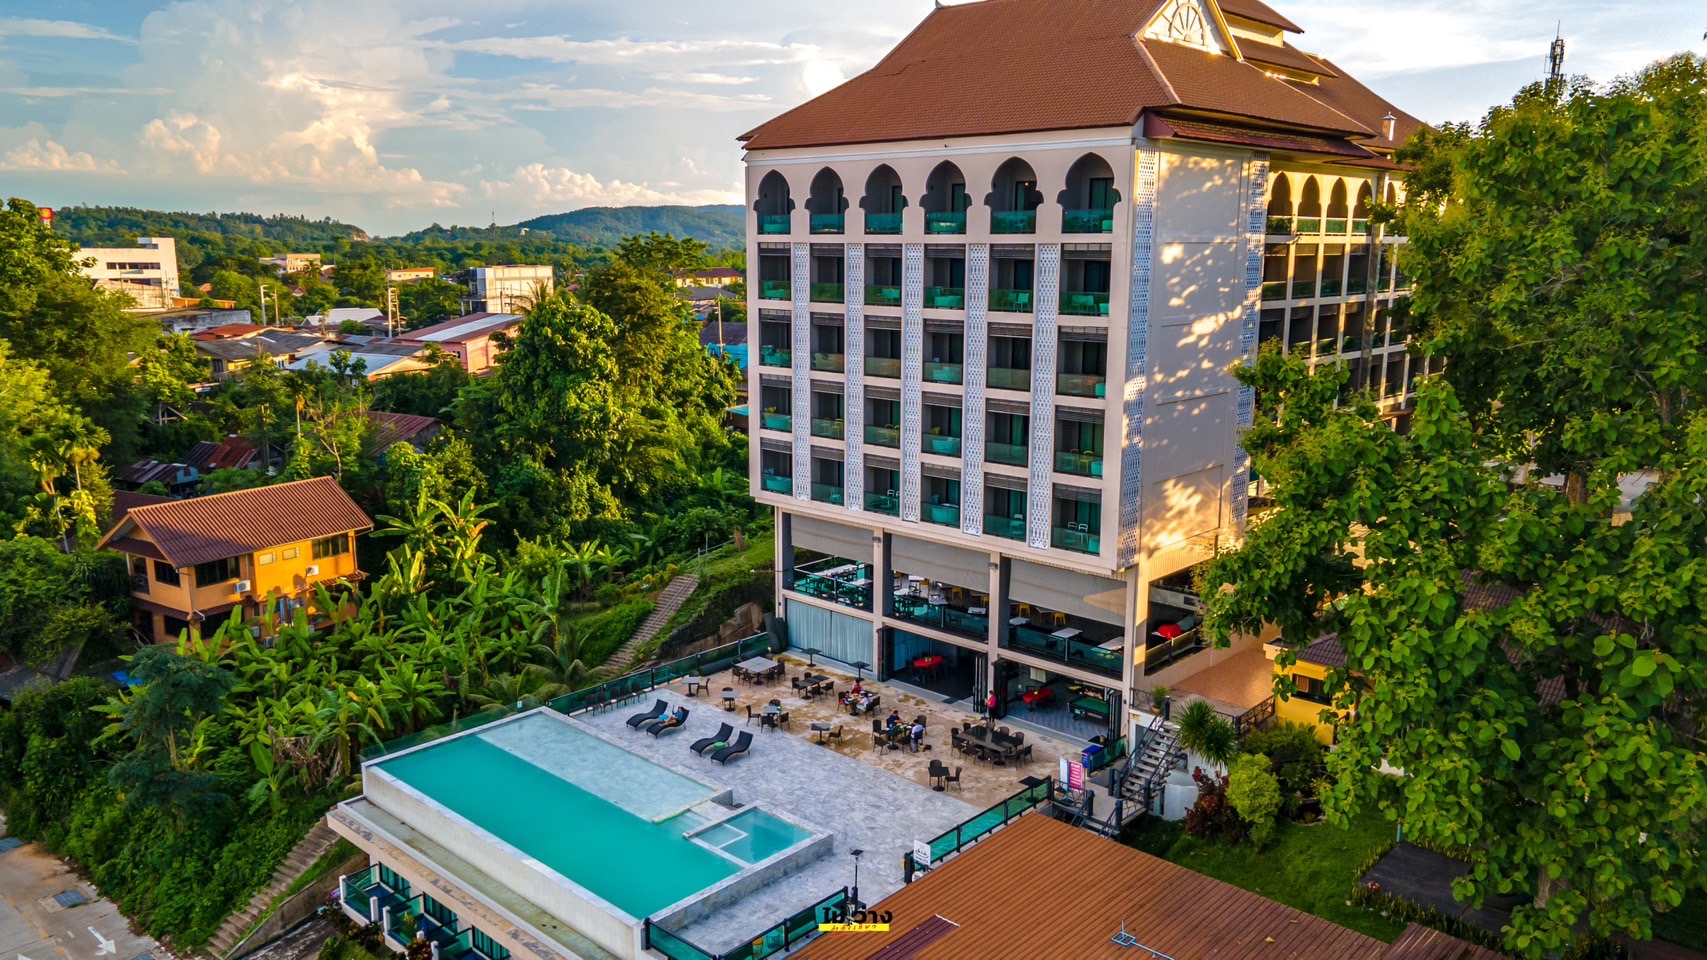 Chiangkhong Teak Garden Riverfront Hotel image